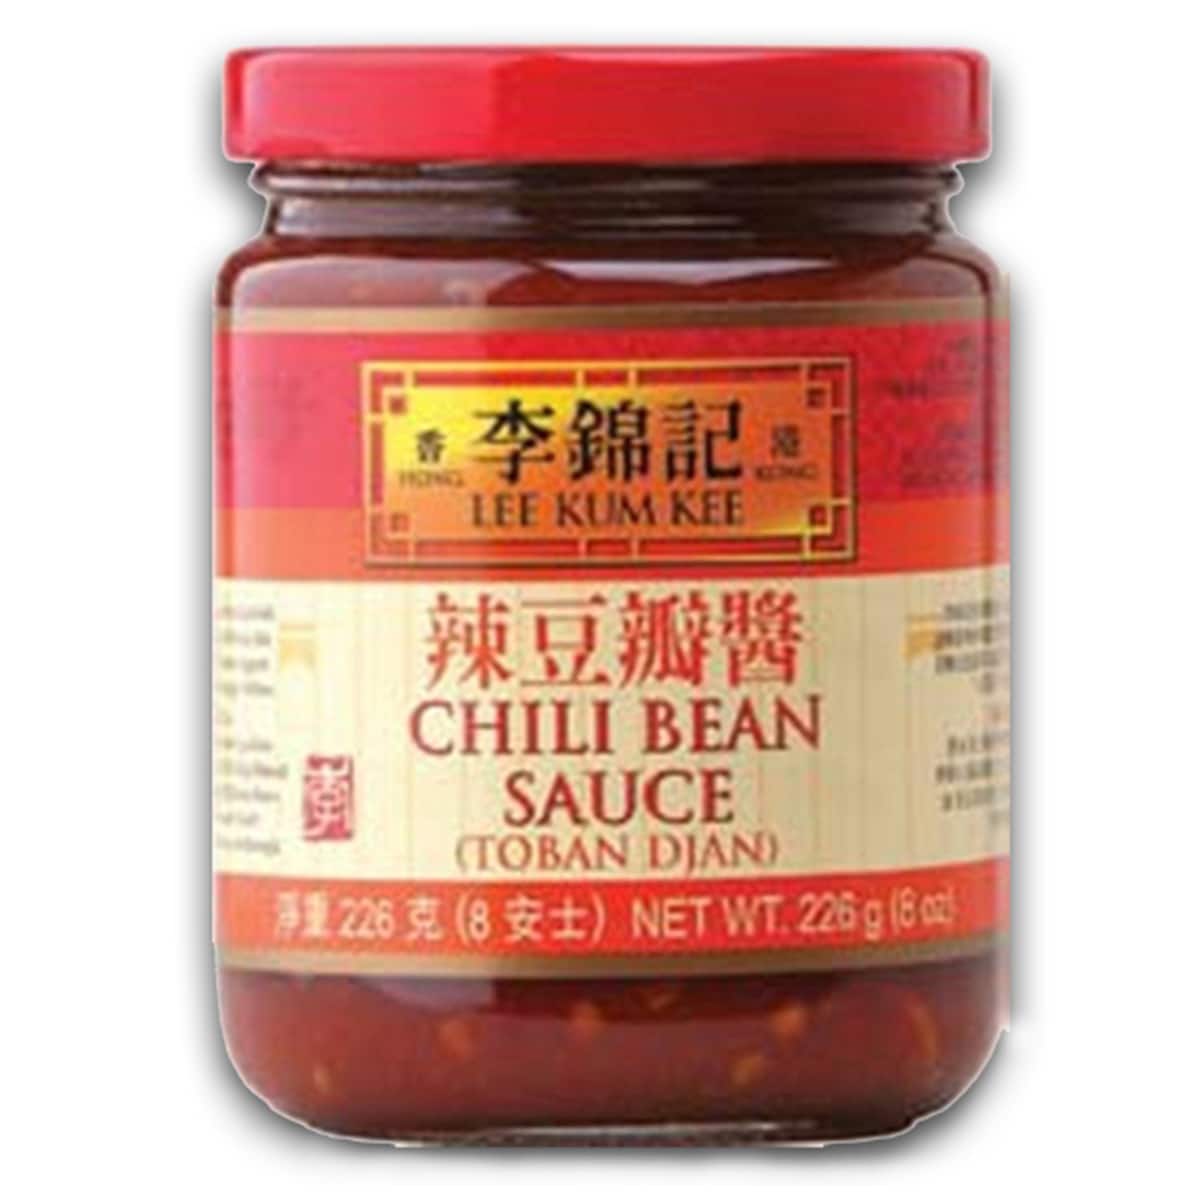 Buy Lee Kum Kee Chili Bean Sauce (Toban Djan) - 226 gm